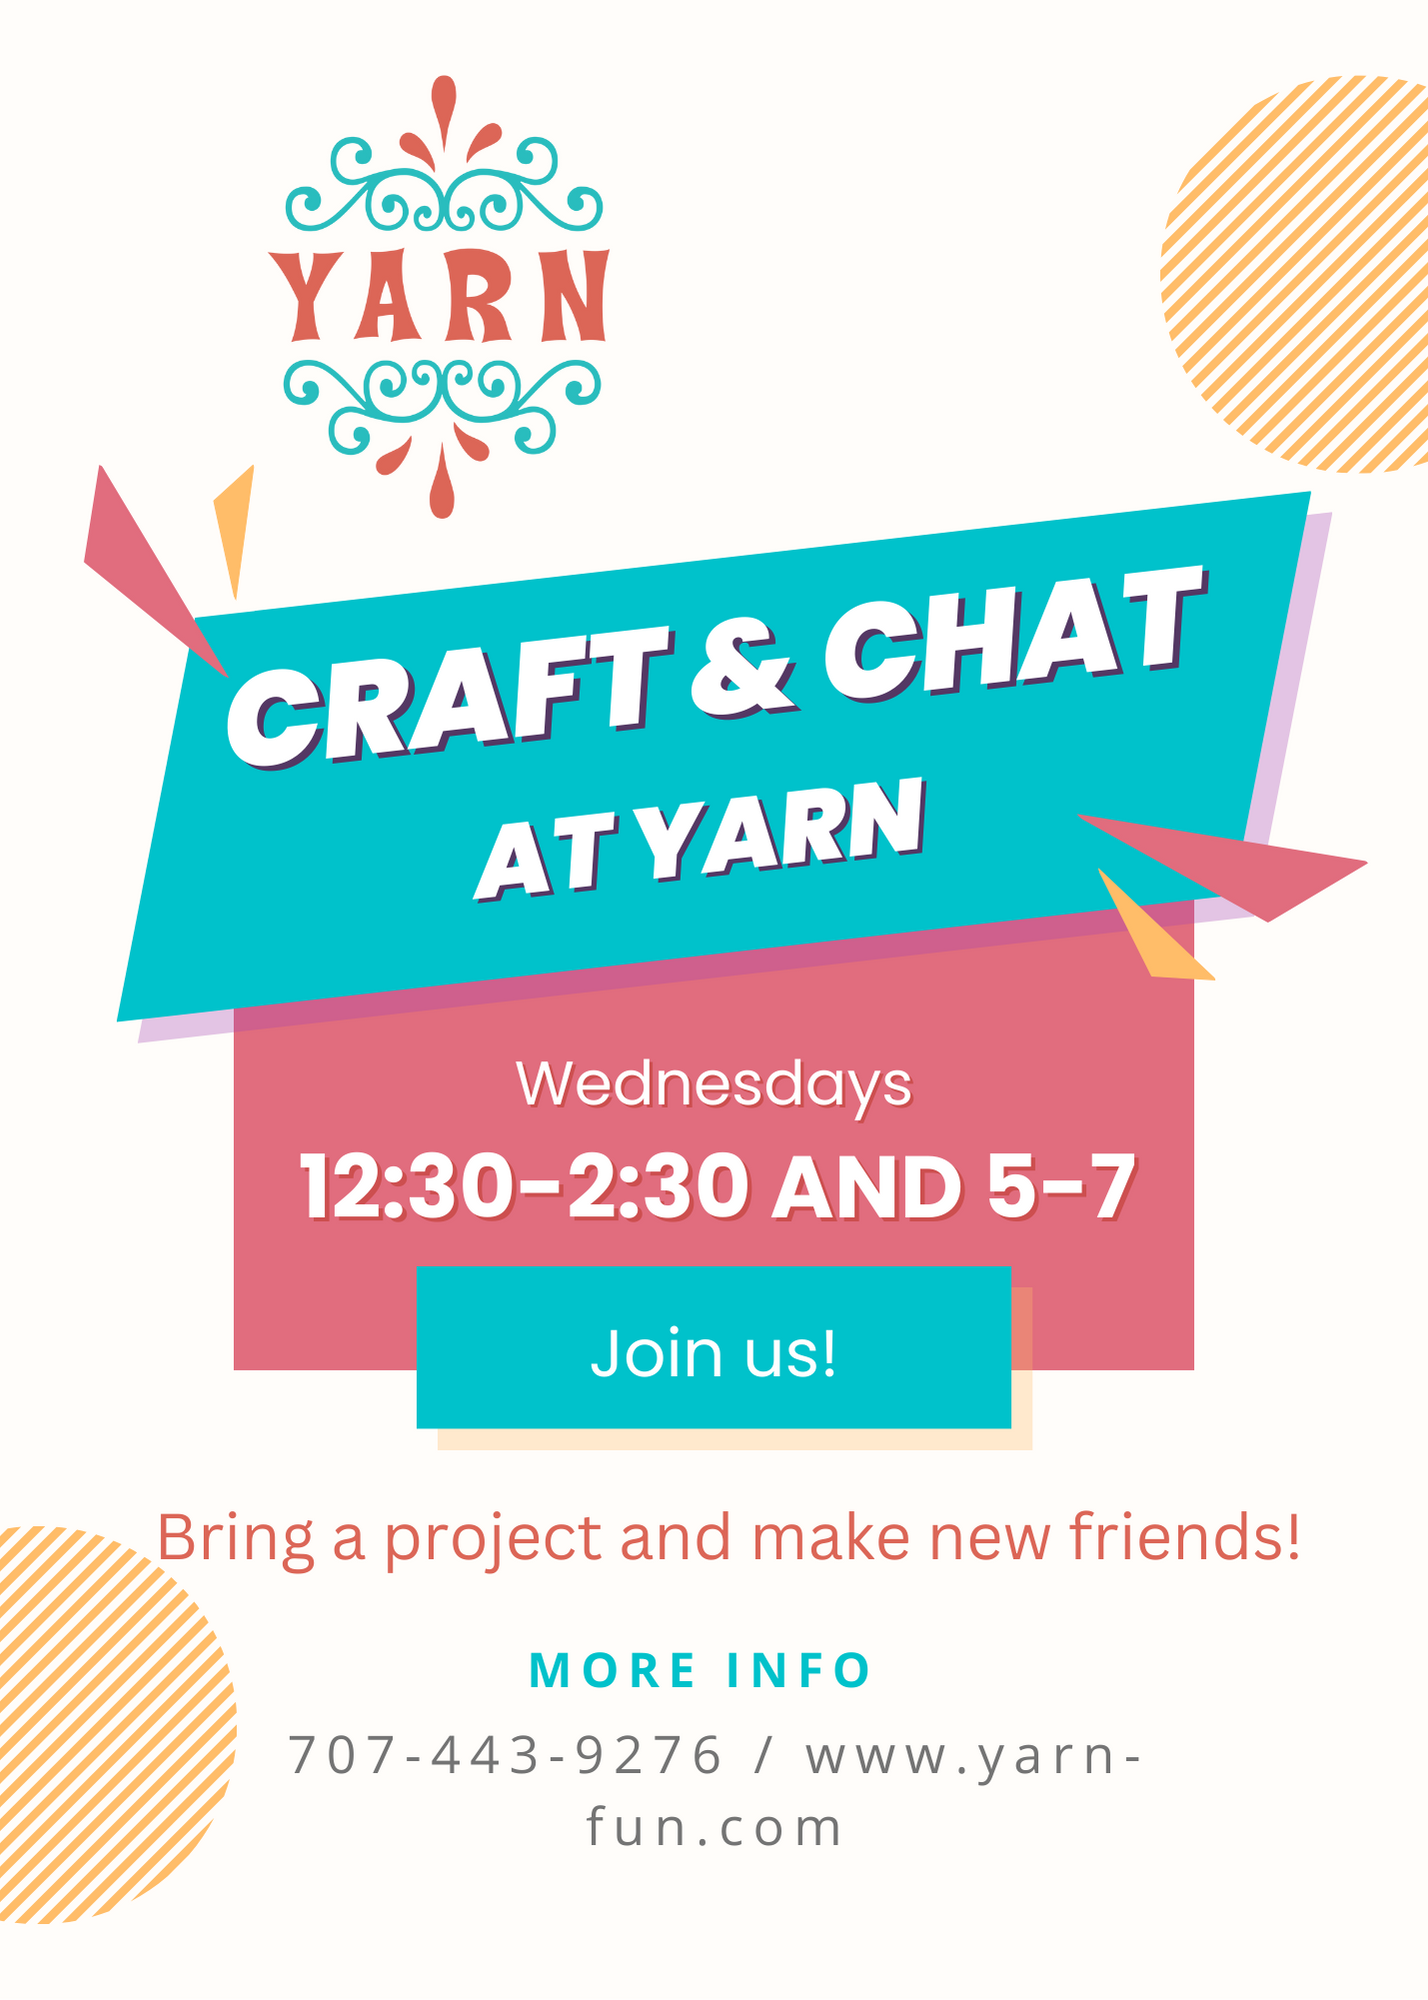 Yarn Craft & Chat groups